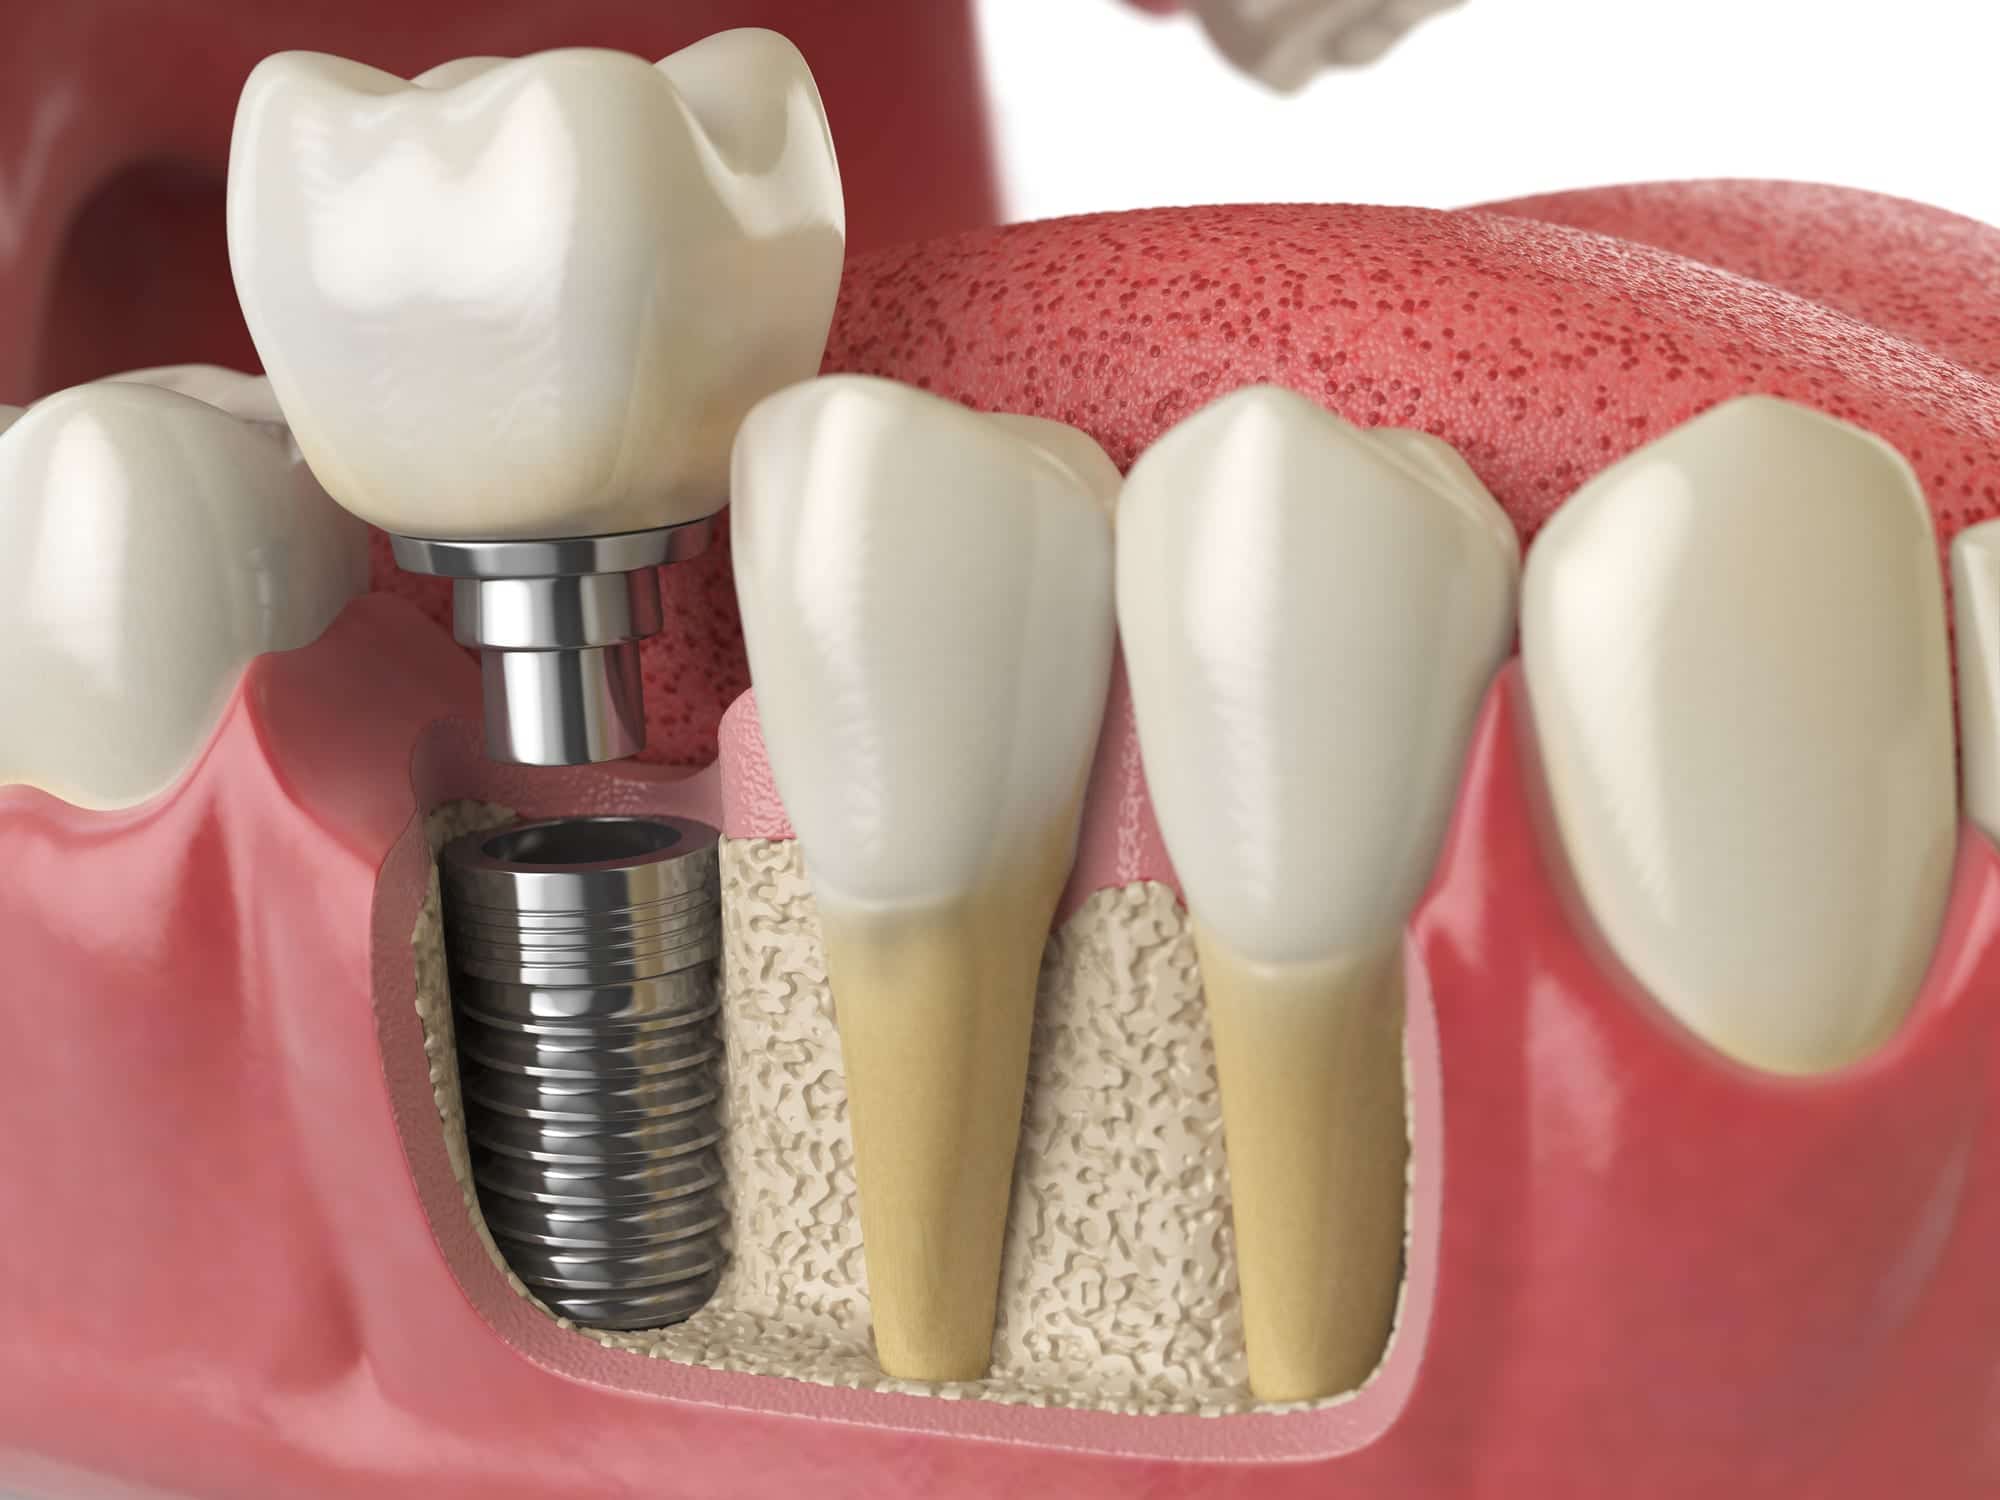 Anatomy of healthy teeth and tooth dental implant in human denturra.